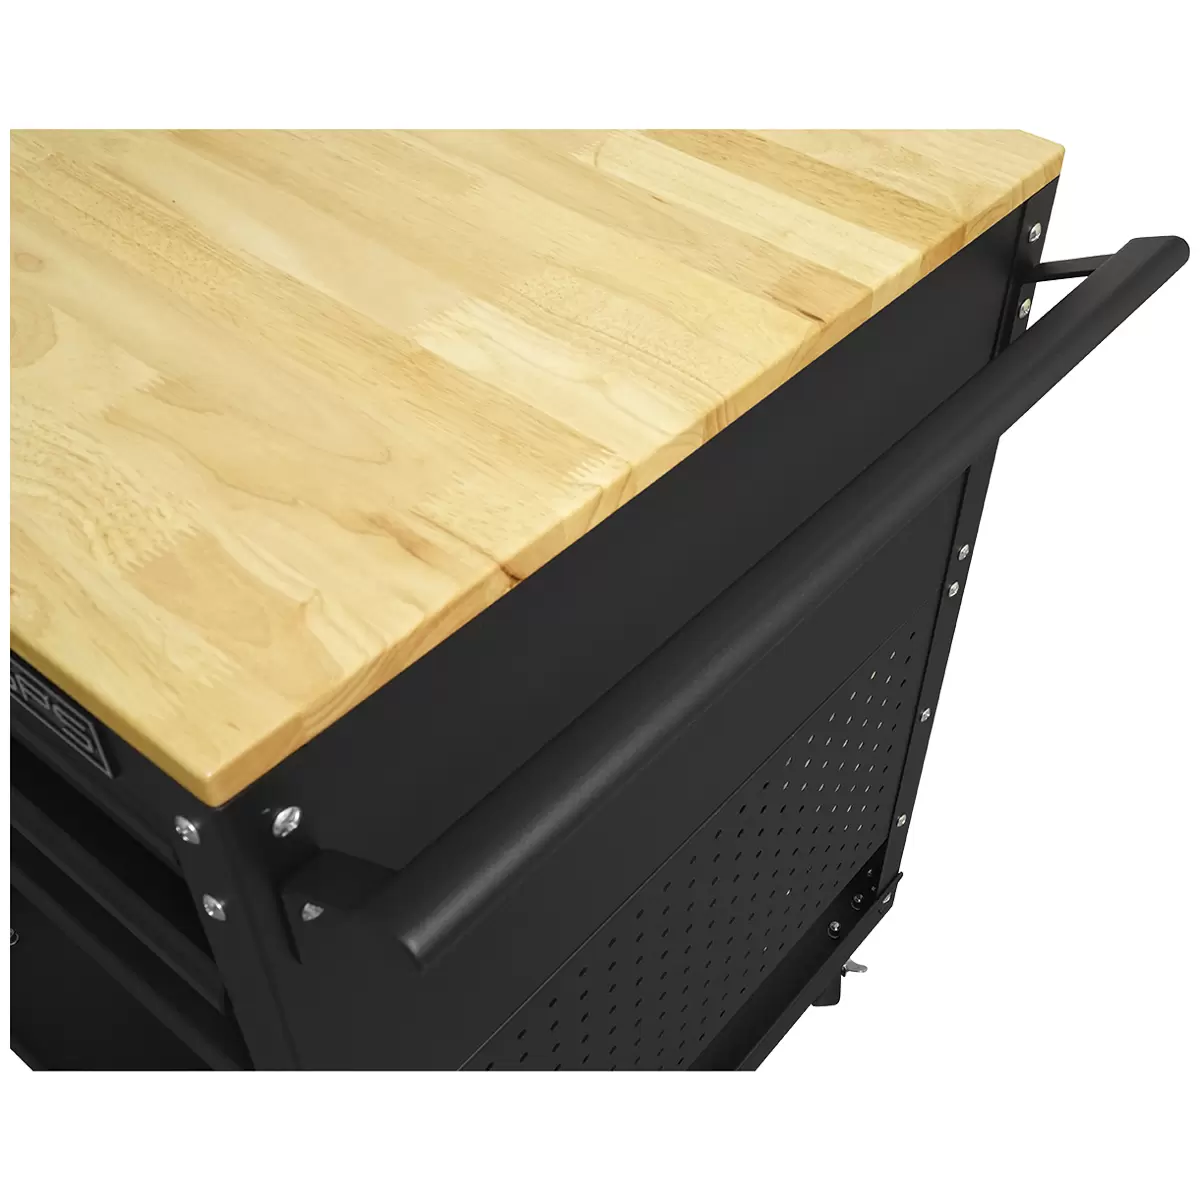 CSPS Tool Cart Rubber wood work Surface 68.6cm